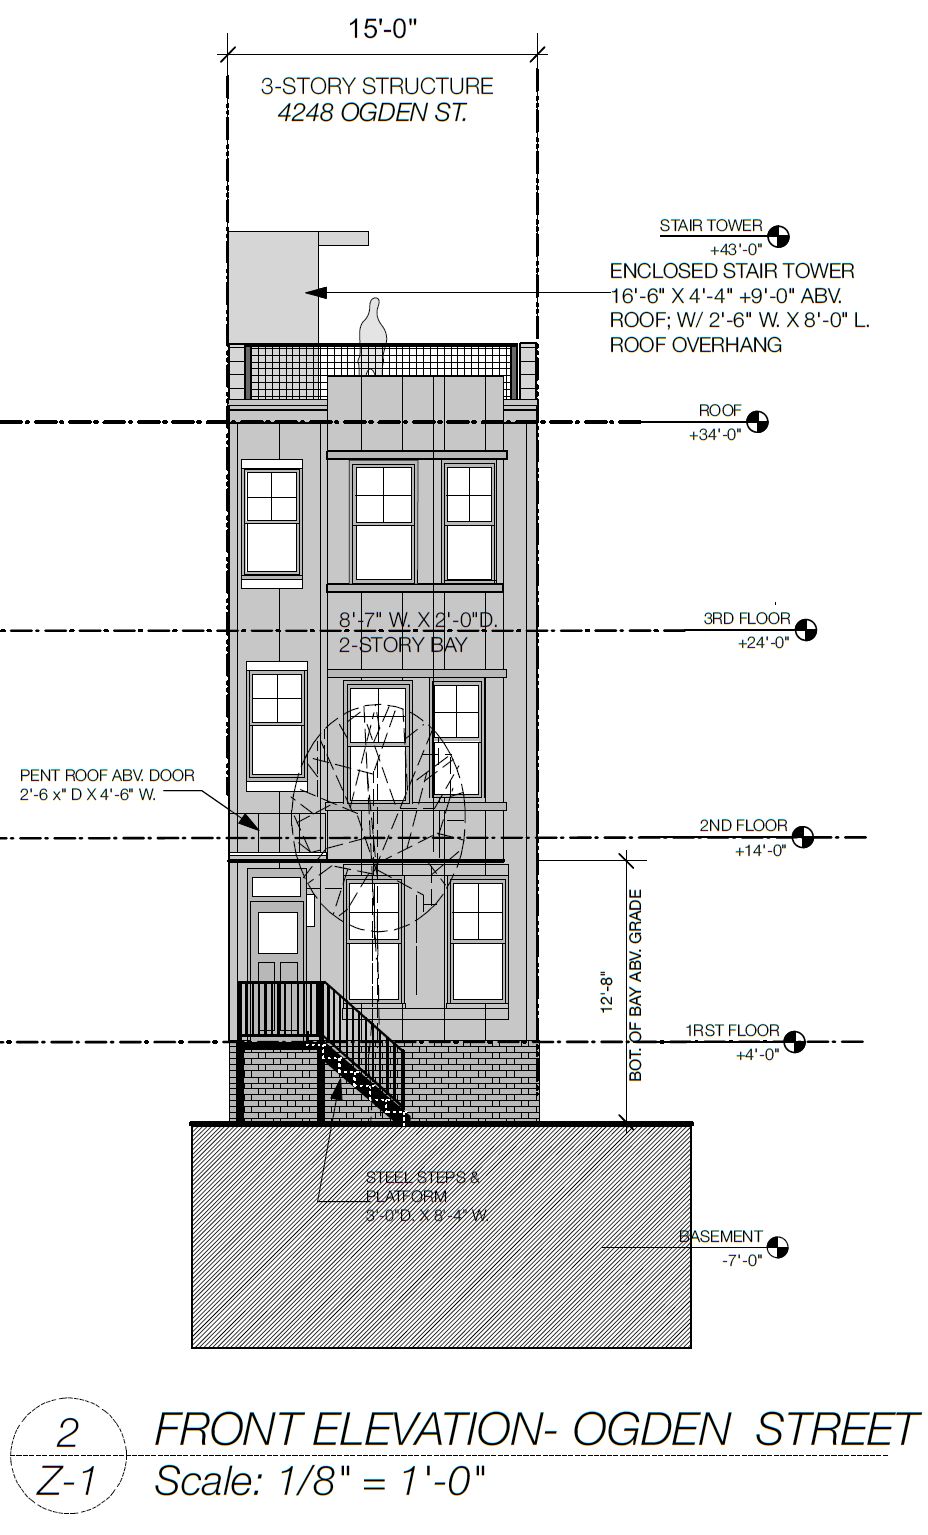 4248 Ogden Street. Building elevation. Credit: JOs. Serratore Co. Architect Inc. via the City of Philadelphia Department of Planning and Development